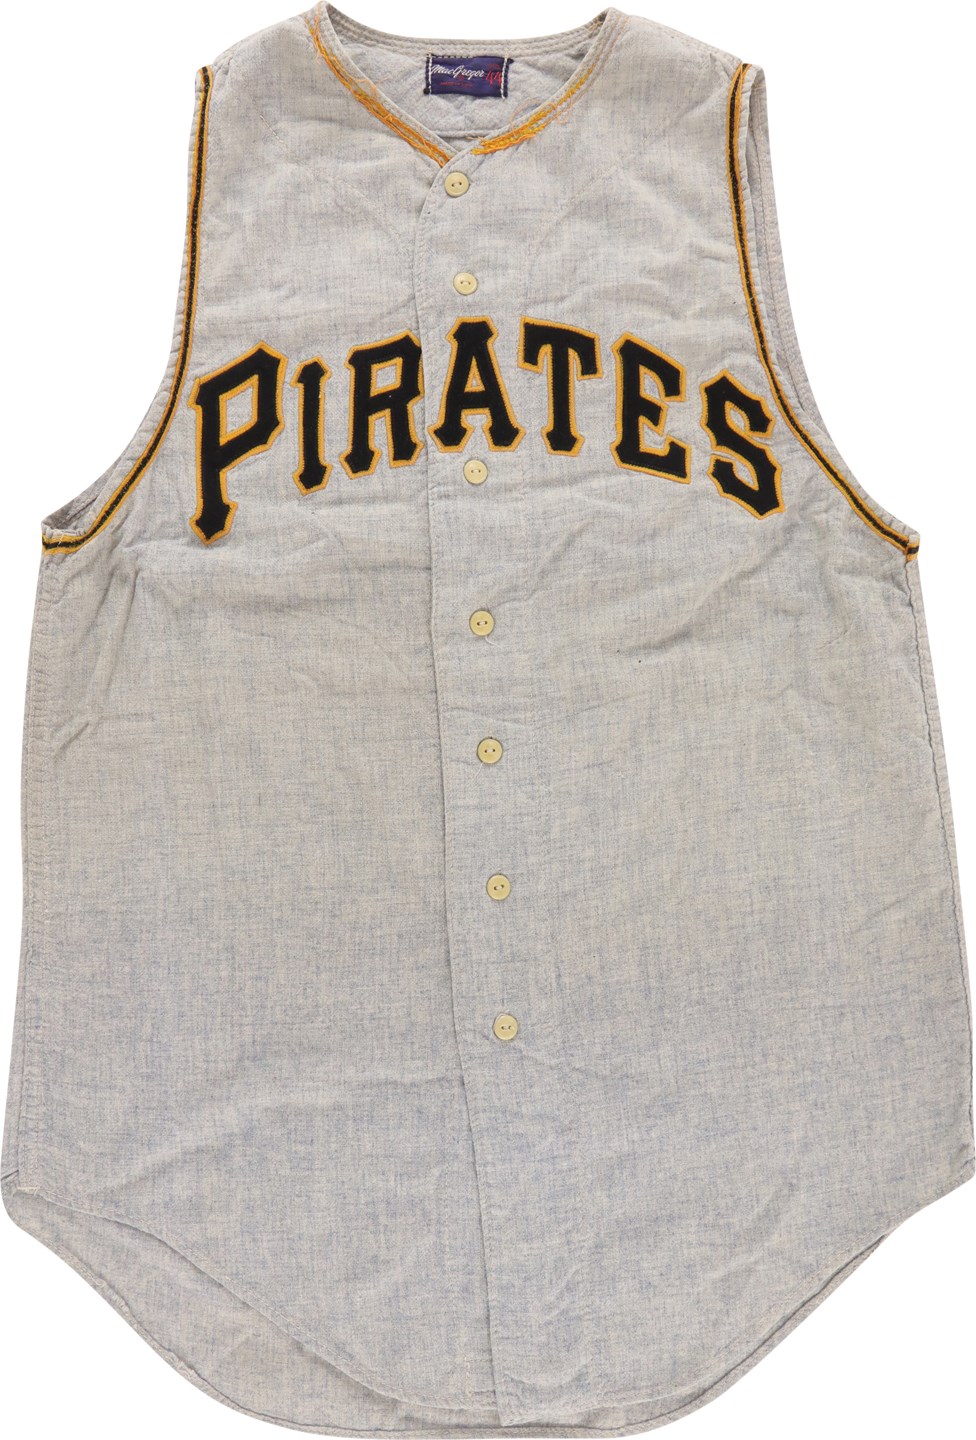 - 1960 Bob Friend Pittsburgh Pirates Game Worn Jersey - Championship Season